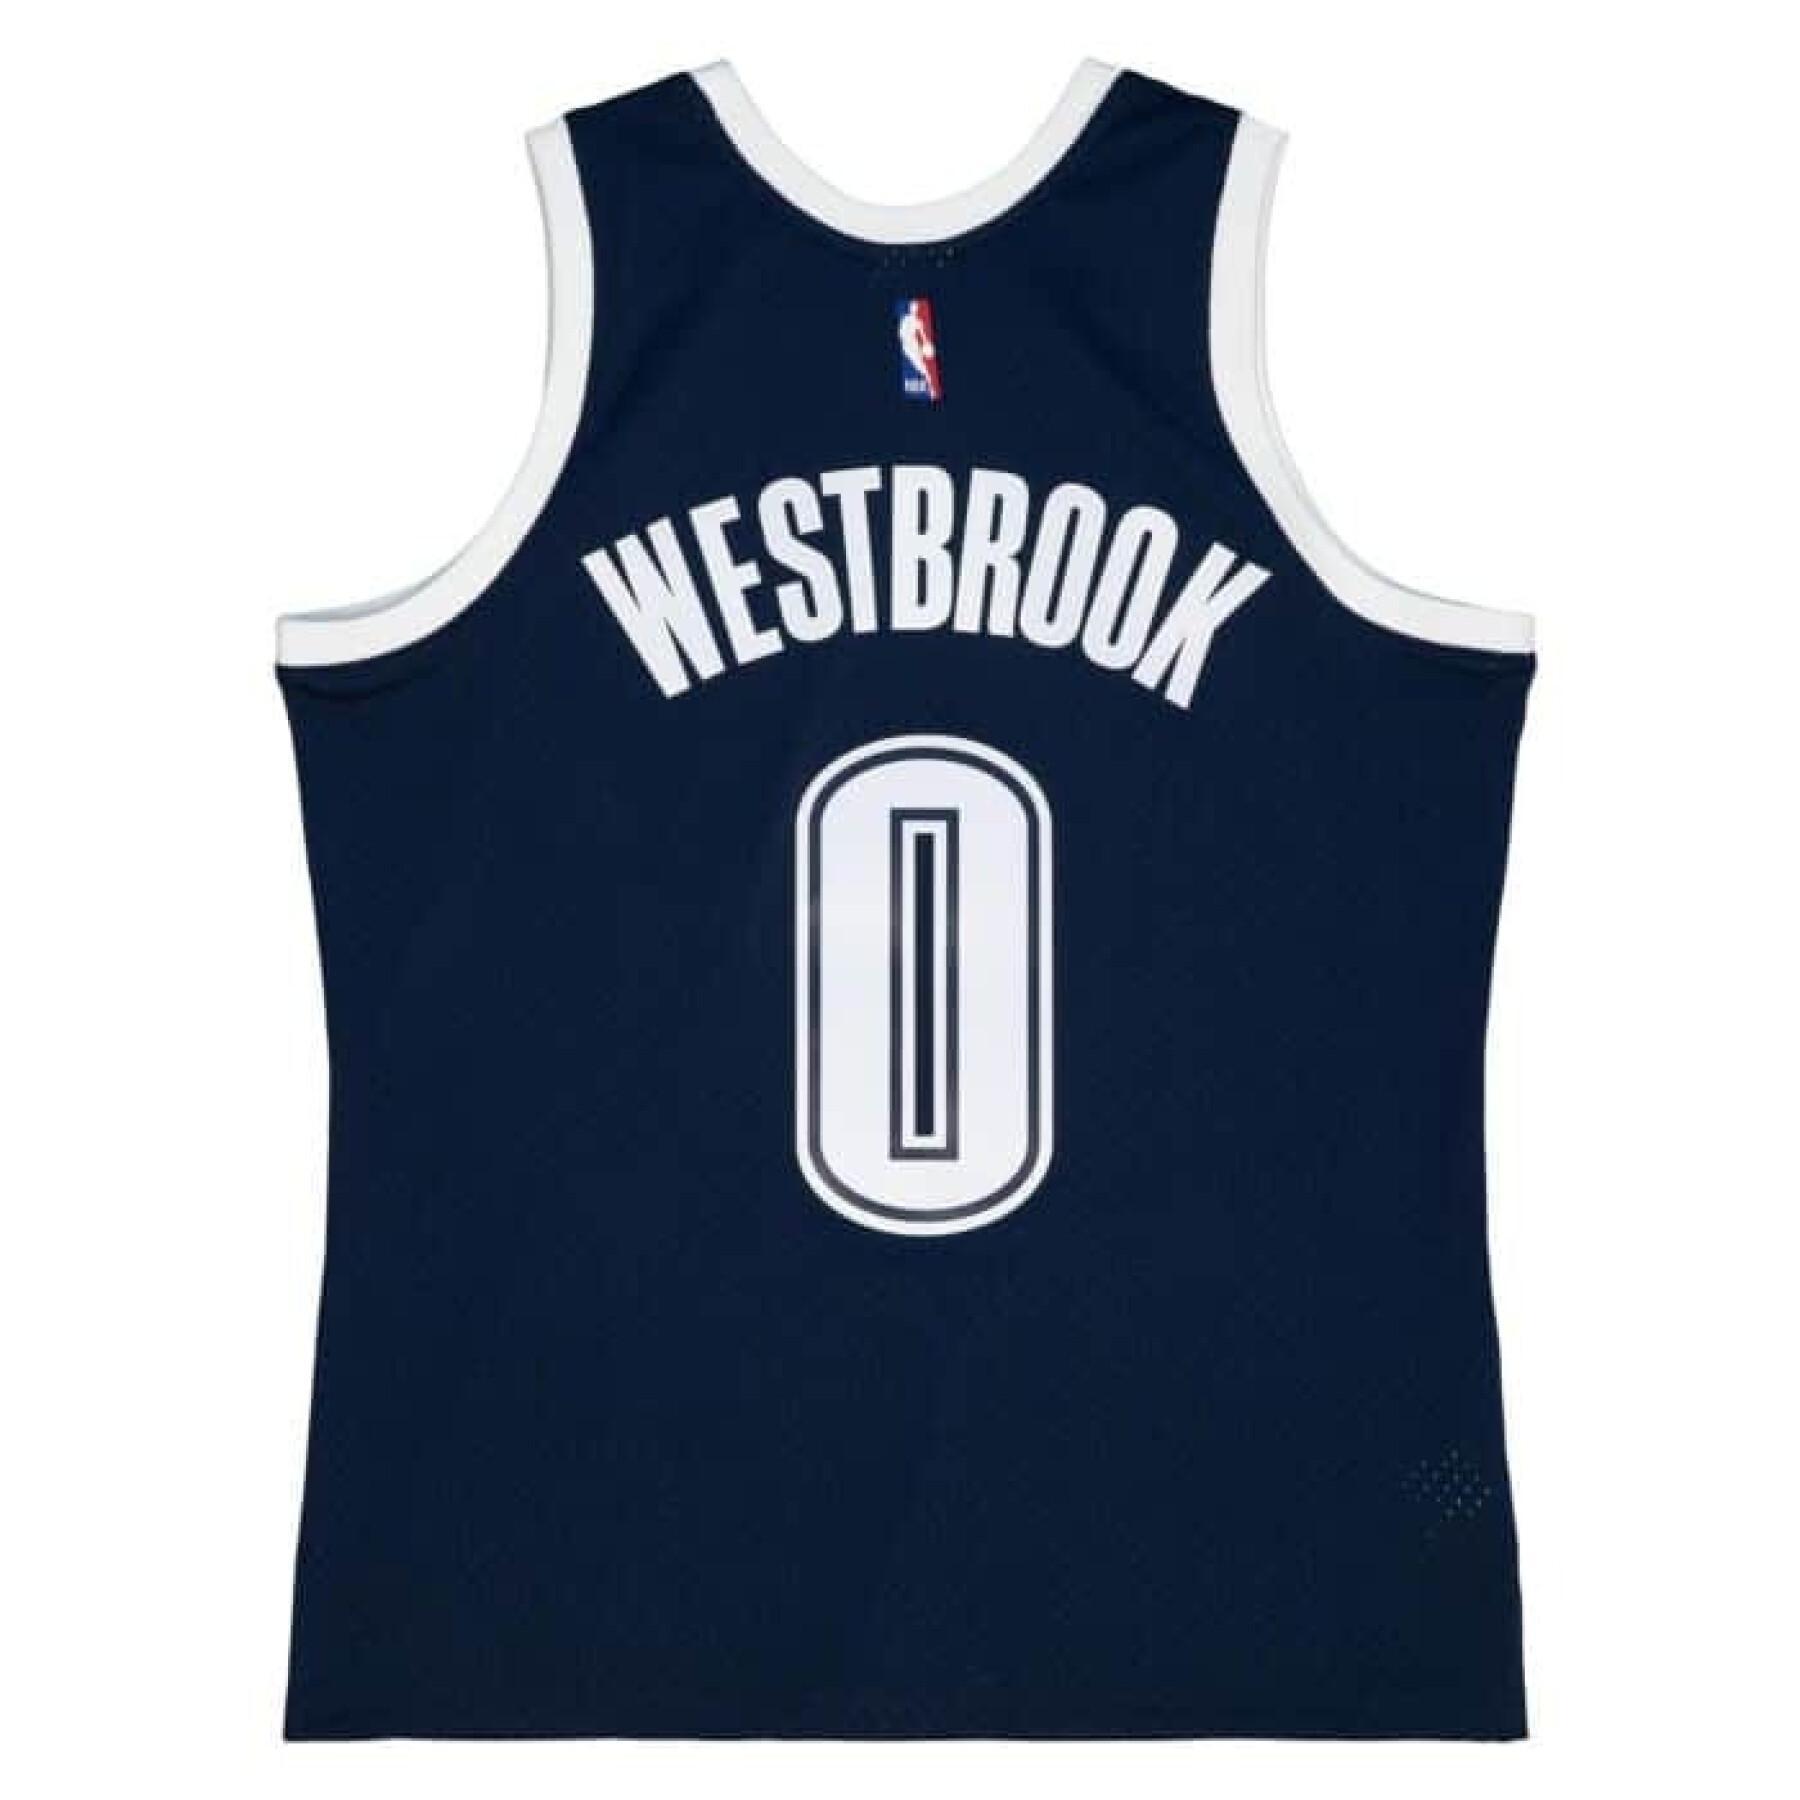 camiseta de la nba Oklahoma City Thunder Russell Westbrook 2015-16